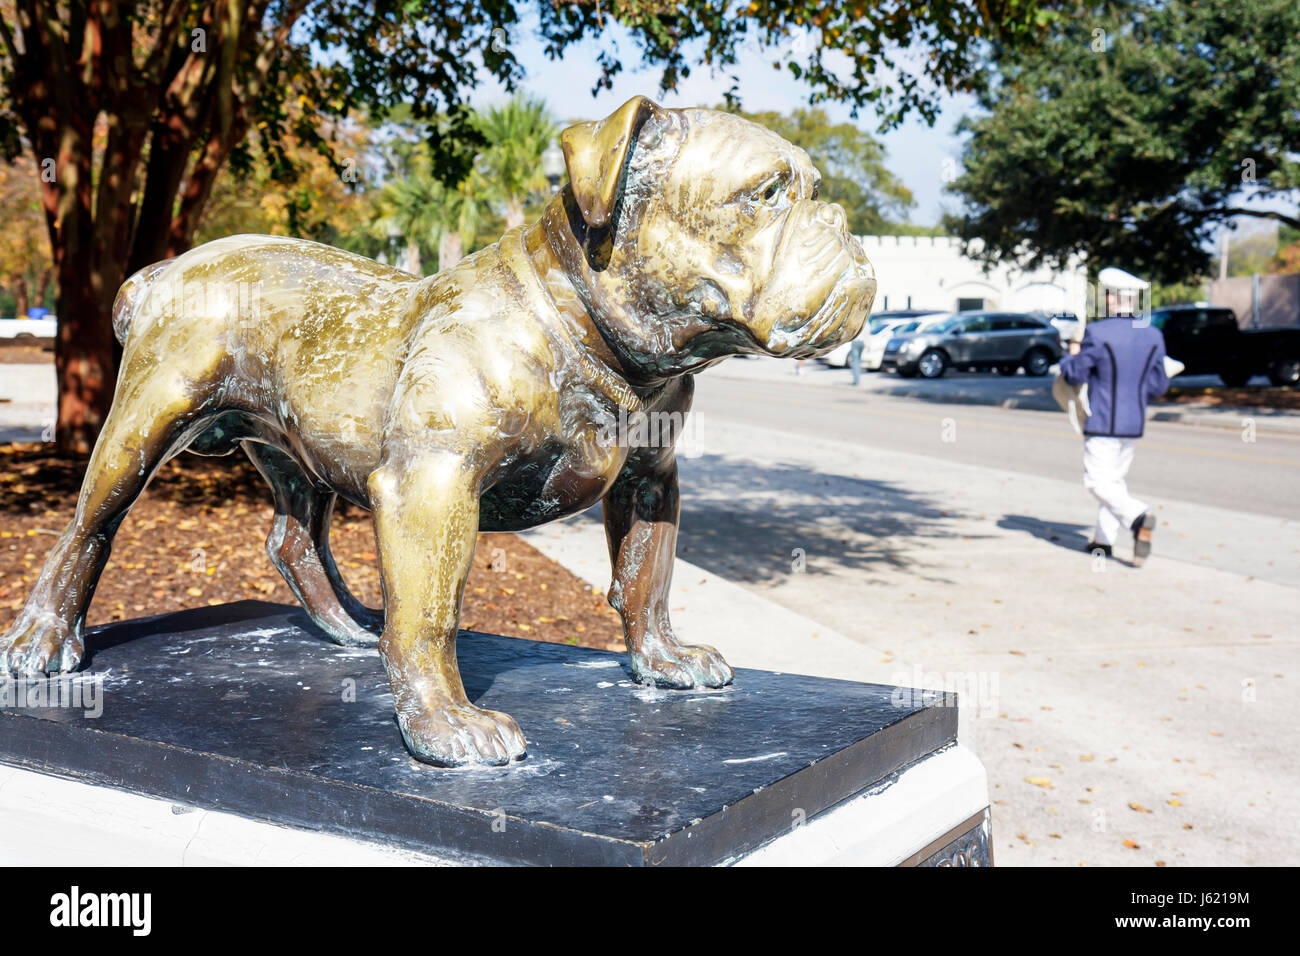 Charleston Caroline du Sud,la Citadelle,le Collège militaire de,Caroline du Sud,militaire,éducation,formation,cadet,discipline,Bulldog Mascot,statue,bronze Banque D'Images